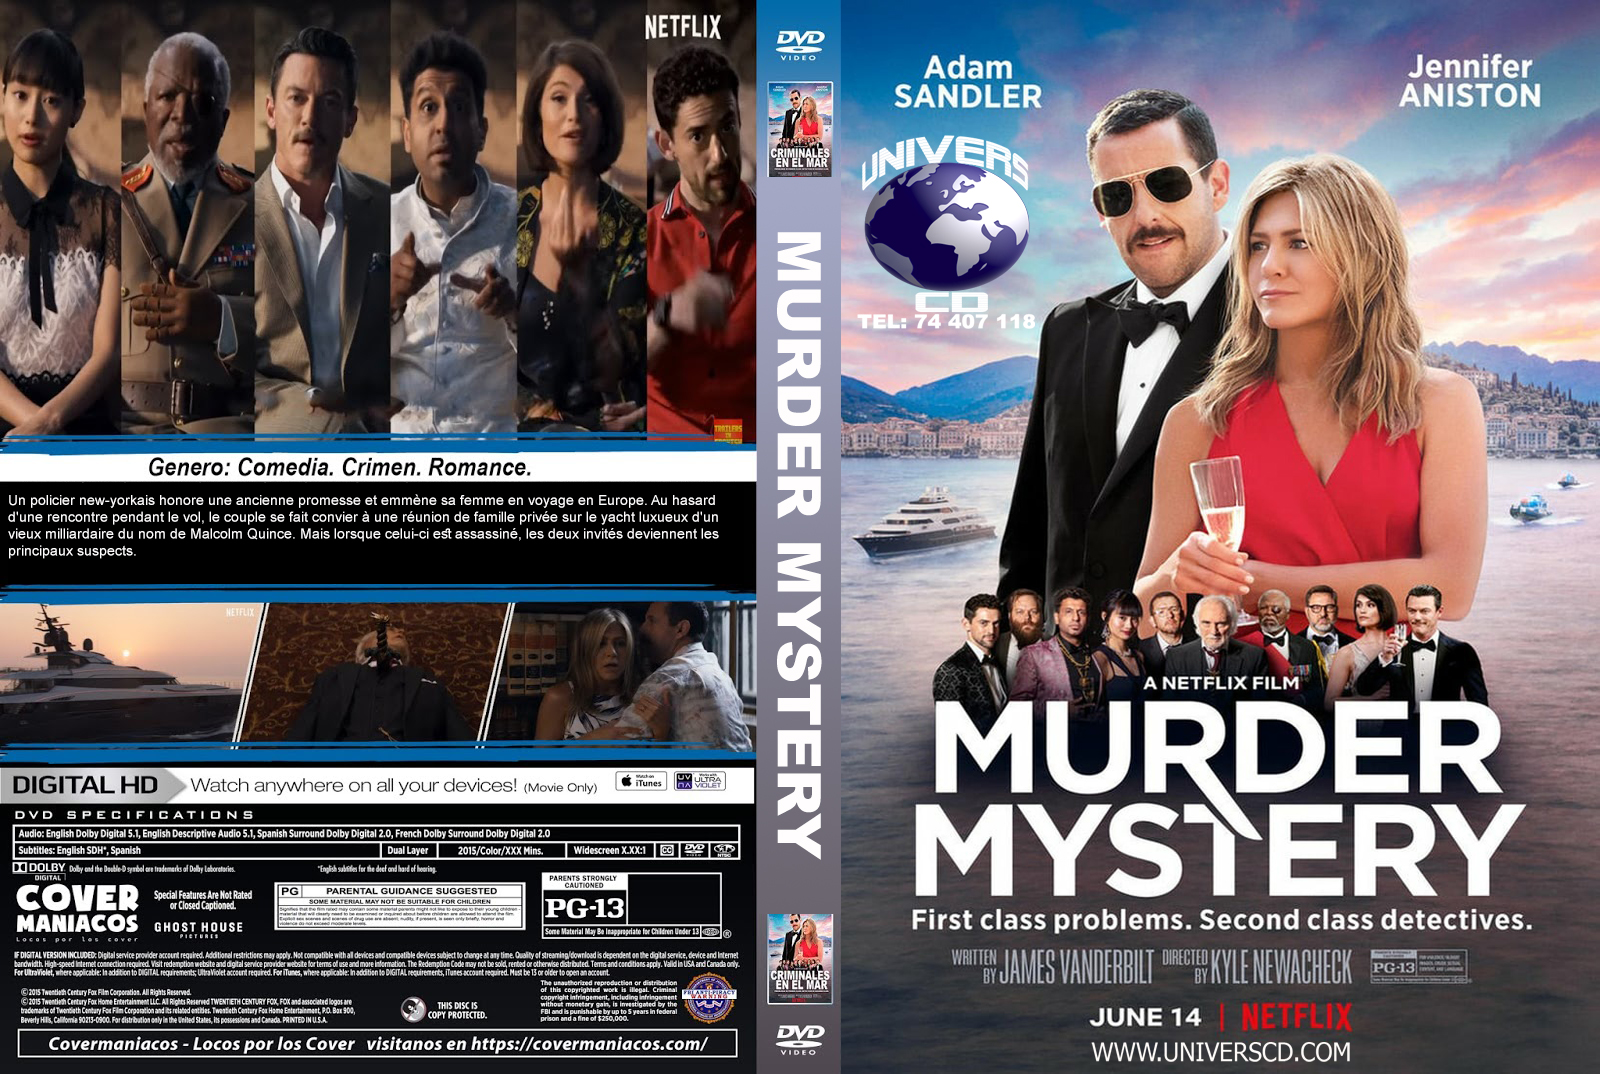 29 Murder Mystery (2019) Adam Sandler Collectie dvd 29 van 33